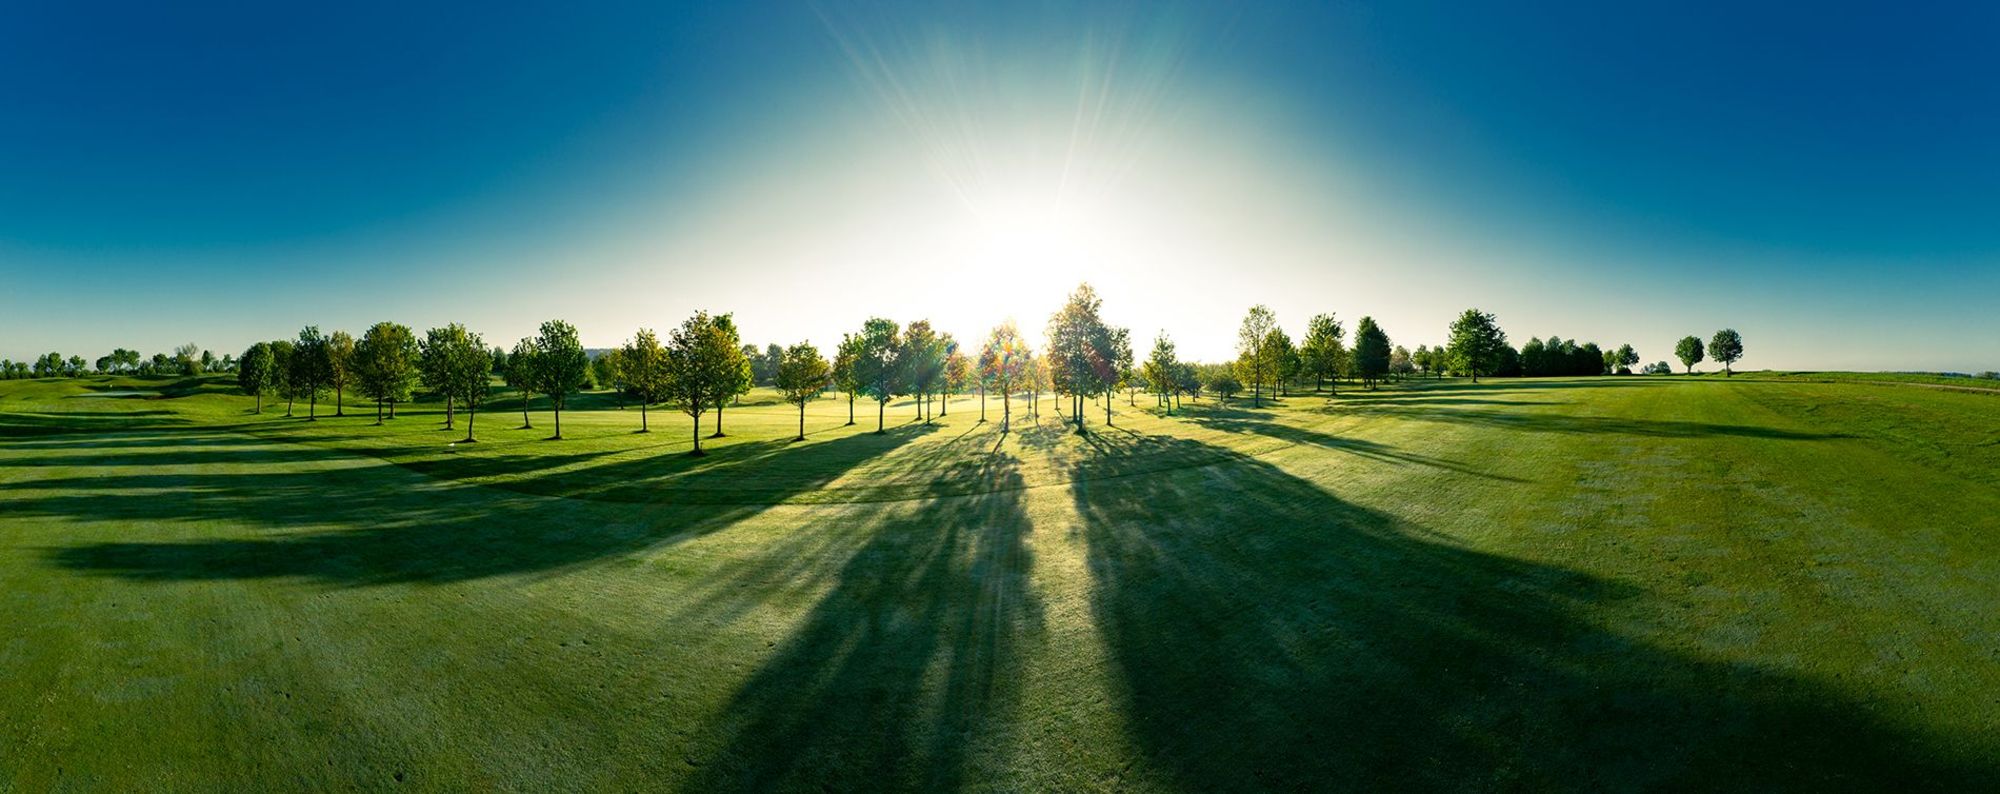 golftrips-jura golf park (6)